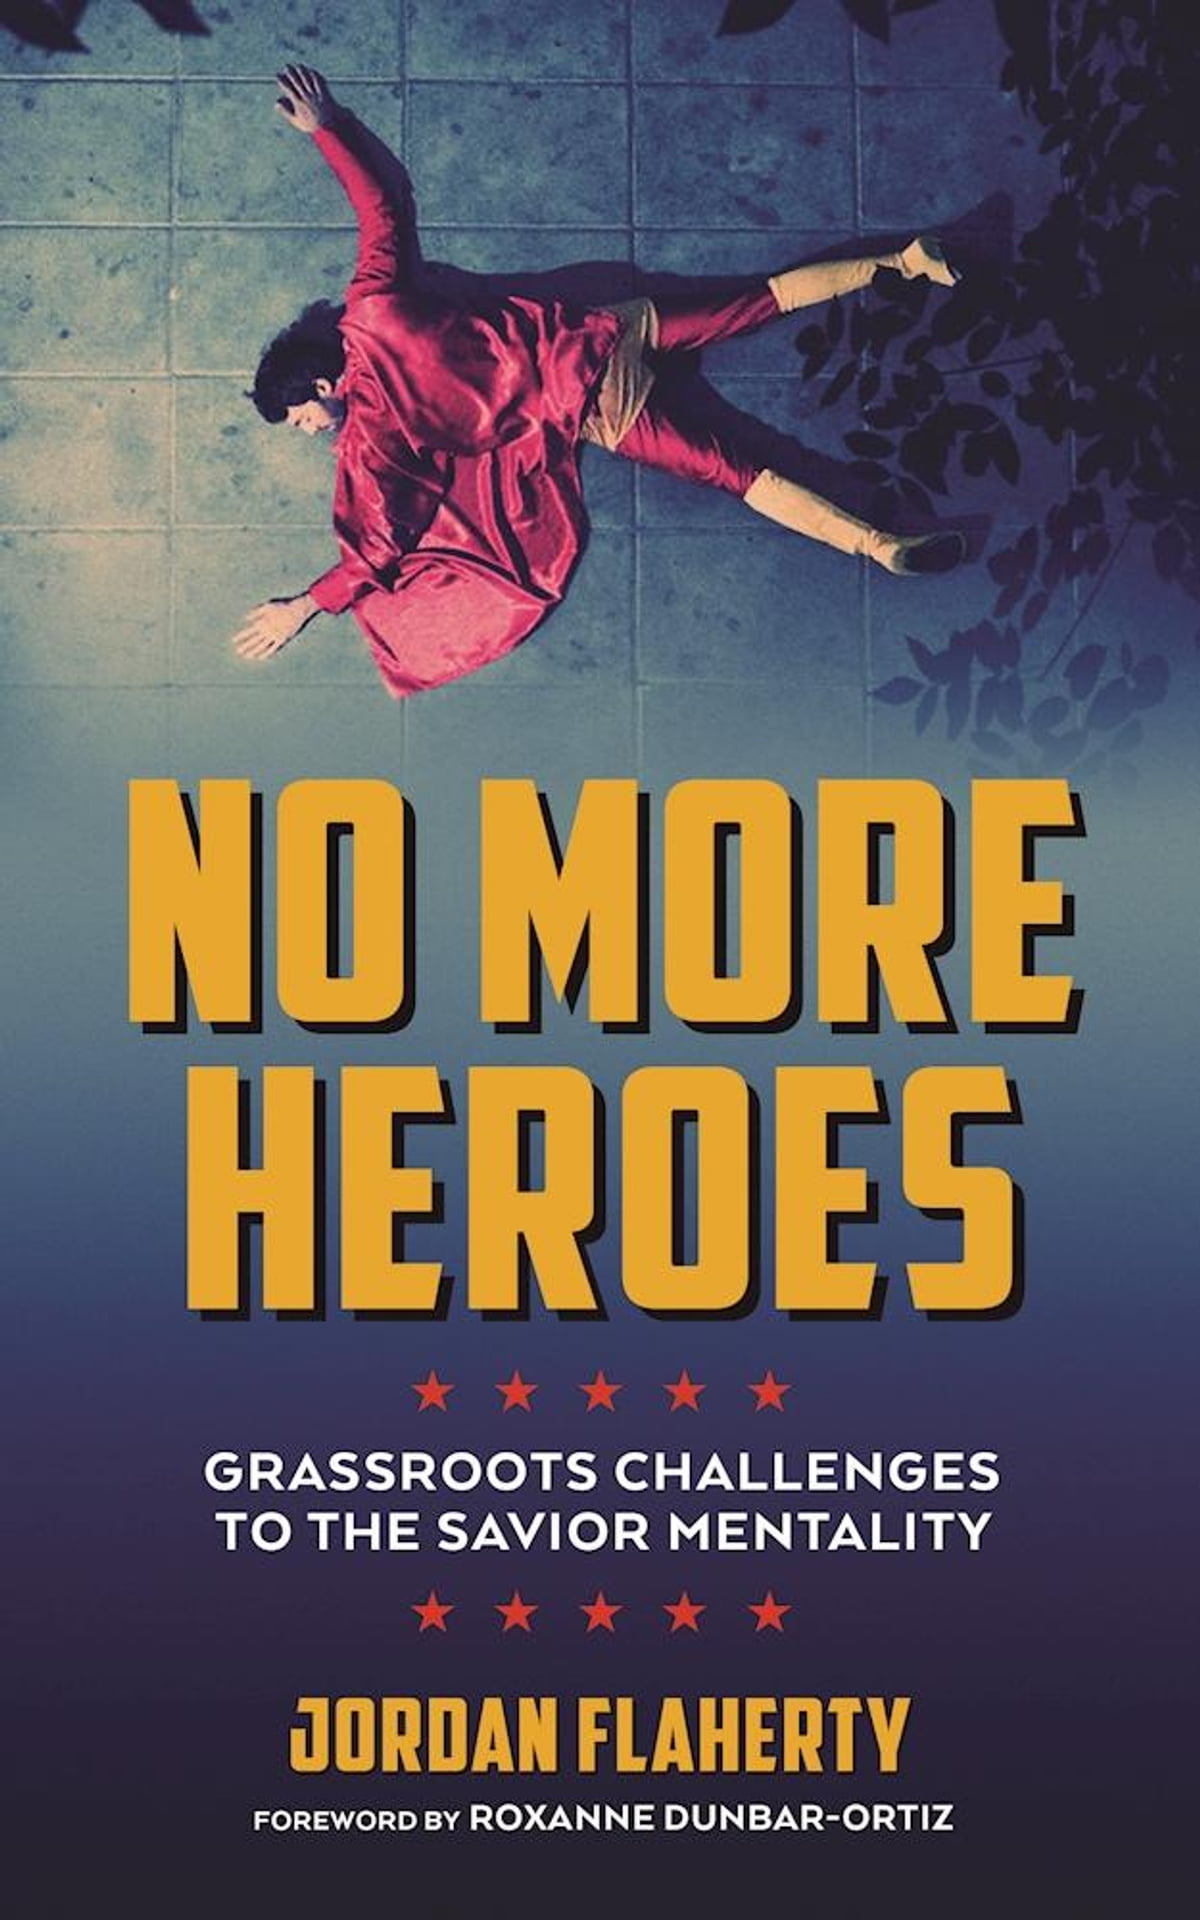 No more heroes (2016)